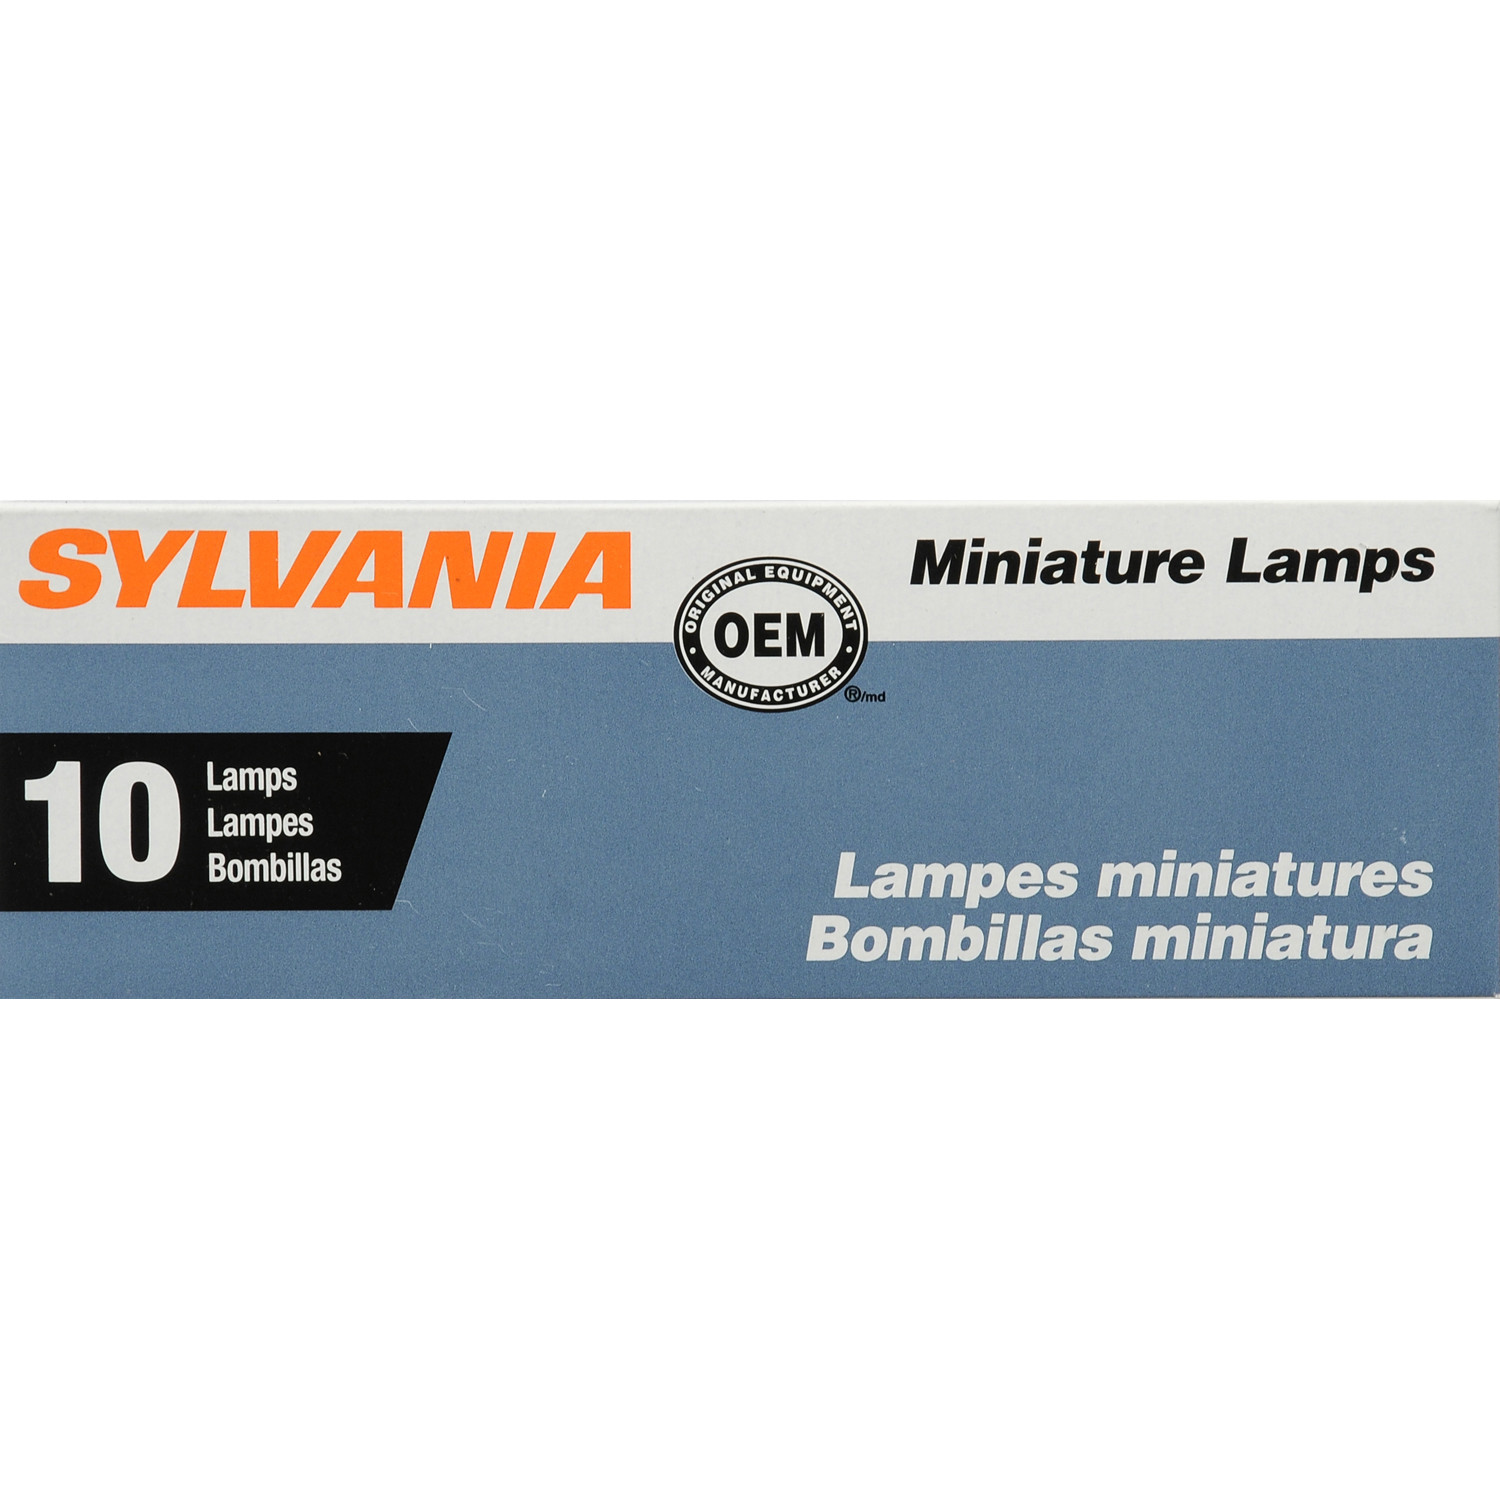 SYLVANIA RETAIL PACKS - 10-Pack Box License Light Bulb - SYR 67.TP